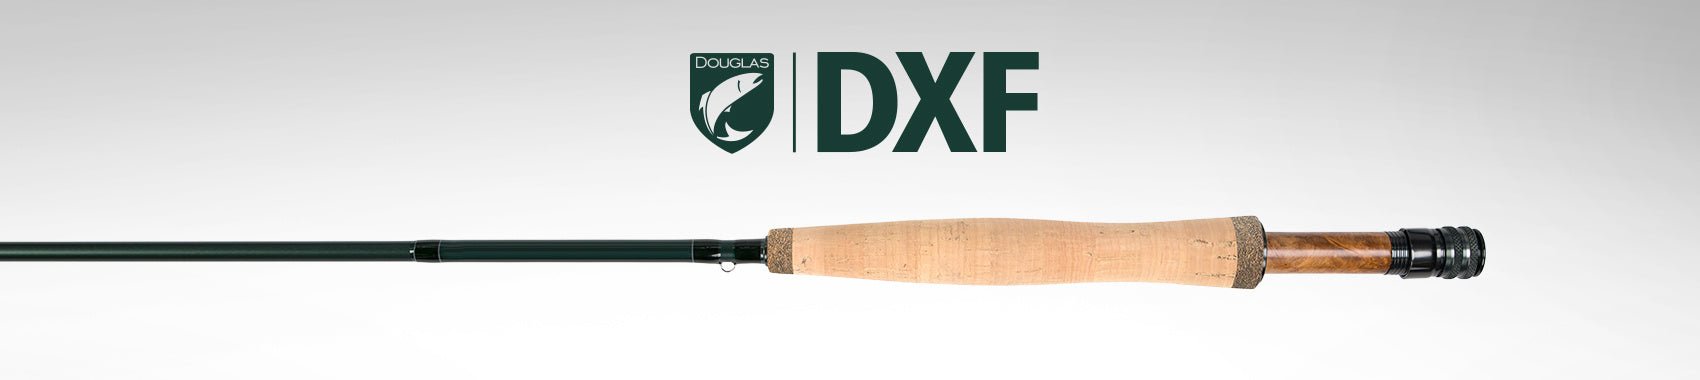 Douglas - DXF - 590-4